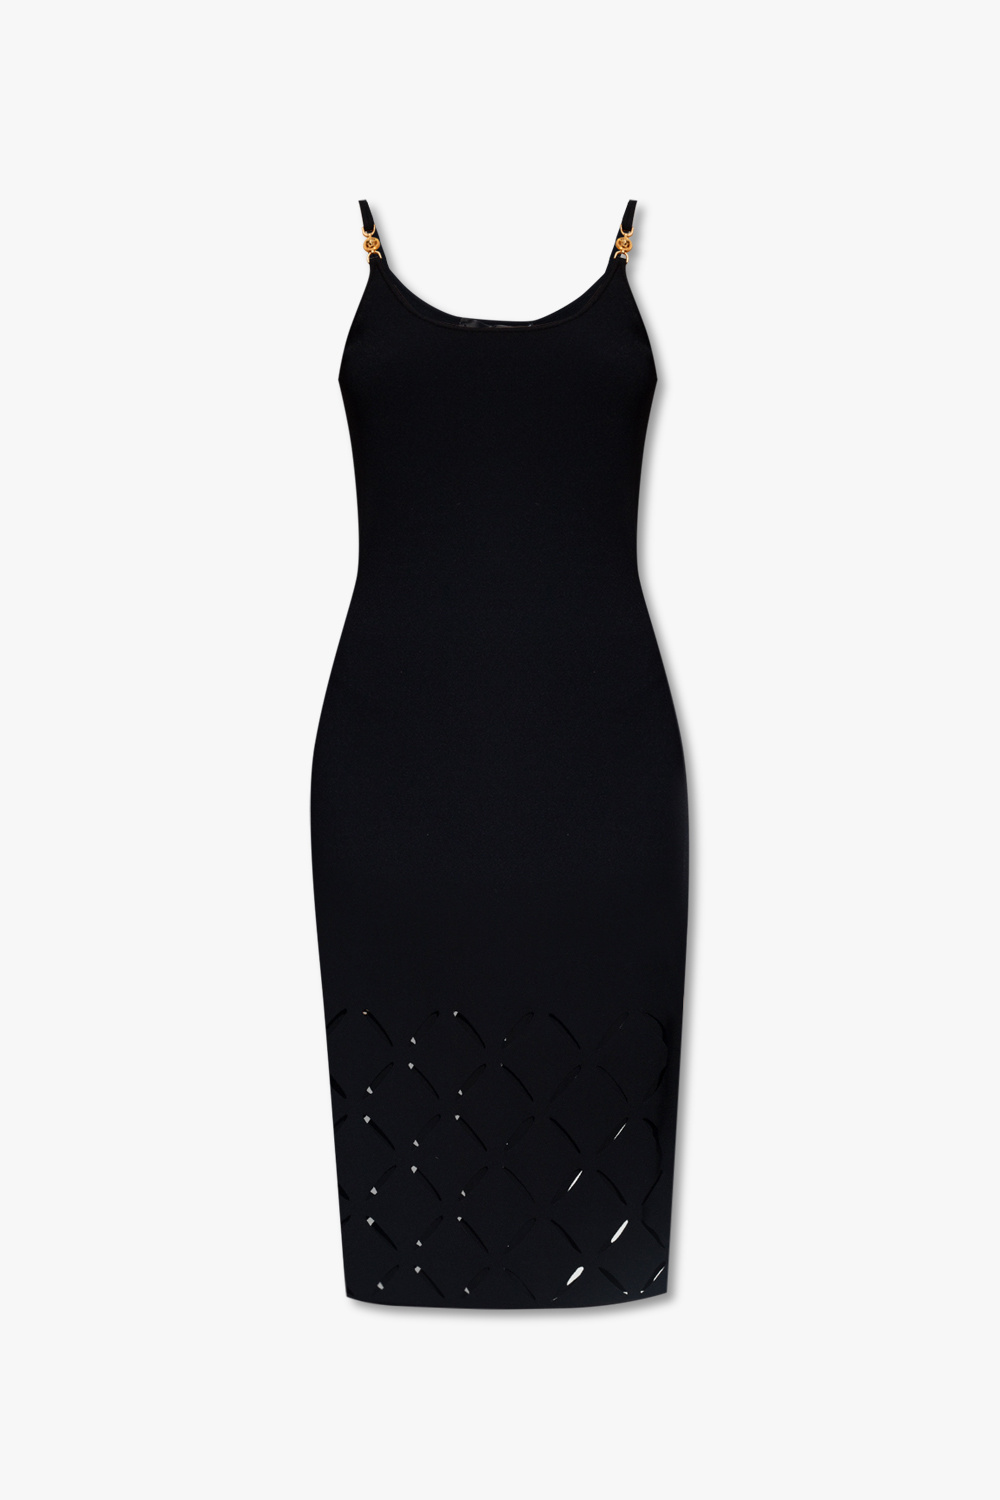 Olivia Culpo, White And Black Bodycon Dress, Louis Vuitton Bodycon